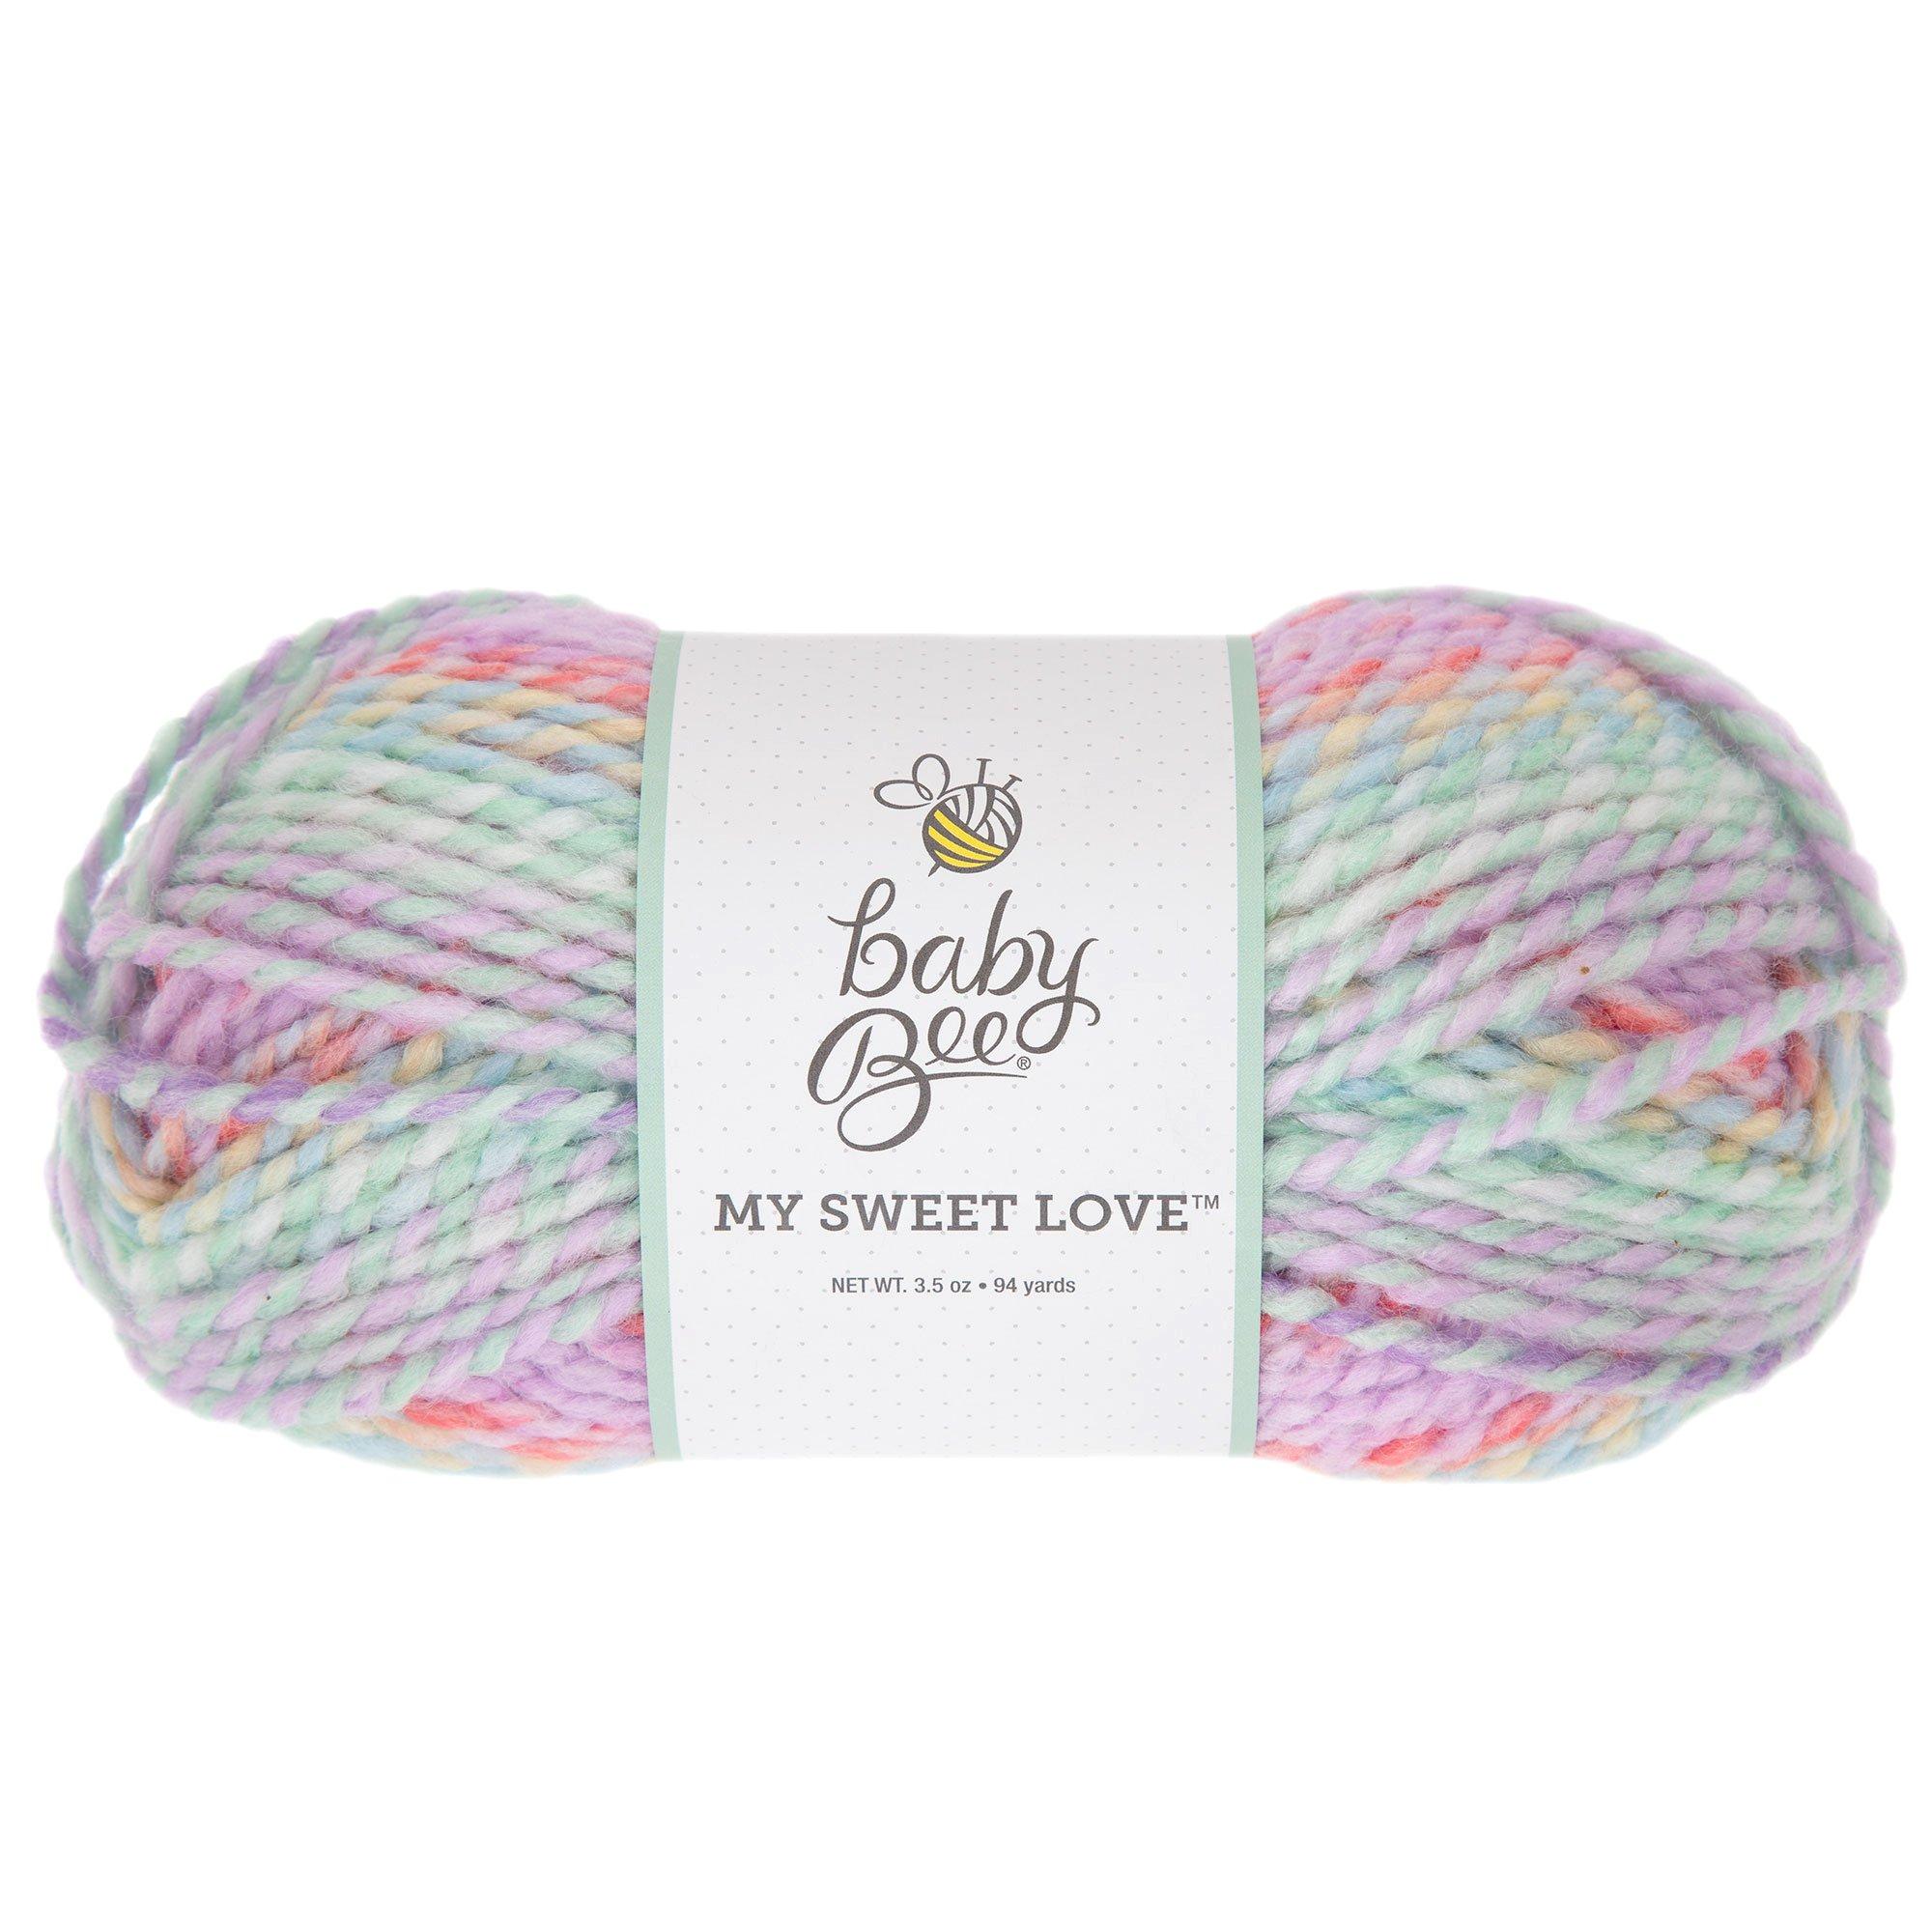 Hobby Lobby Pink-A-Boo Baby Bee Soft & Sleek Baby Yarn-Set of 3